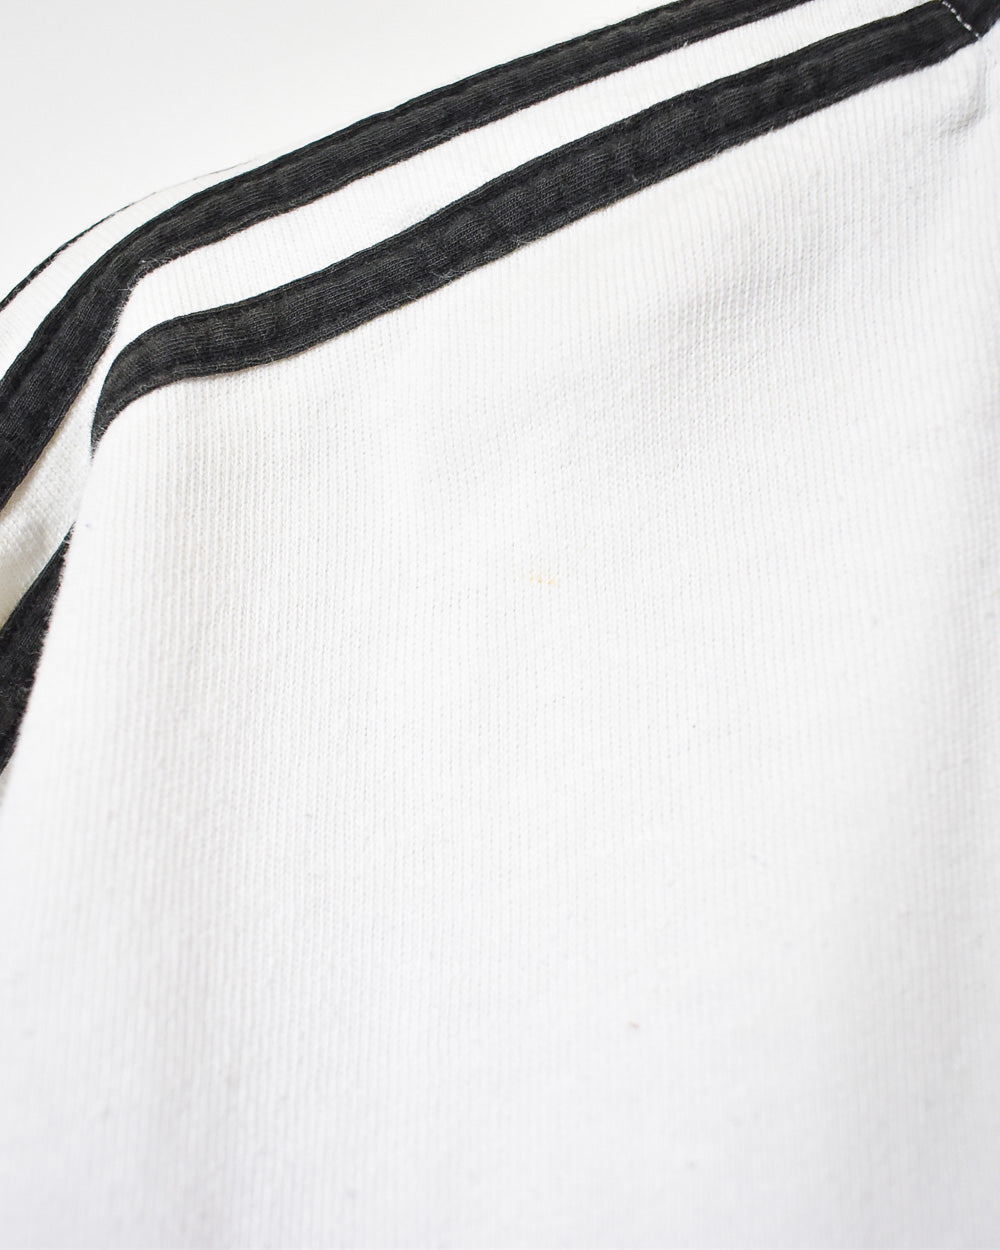 White Adidas Rugby Shirt - Large